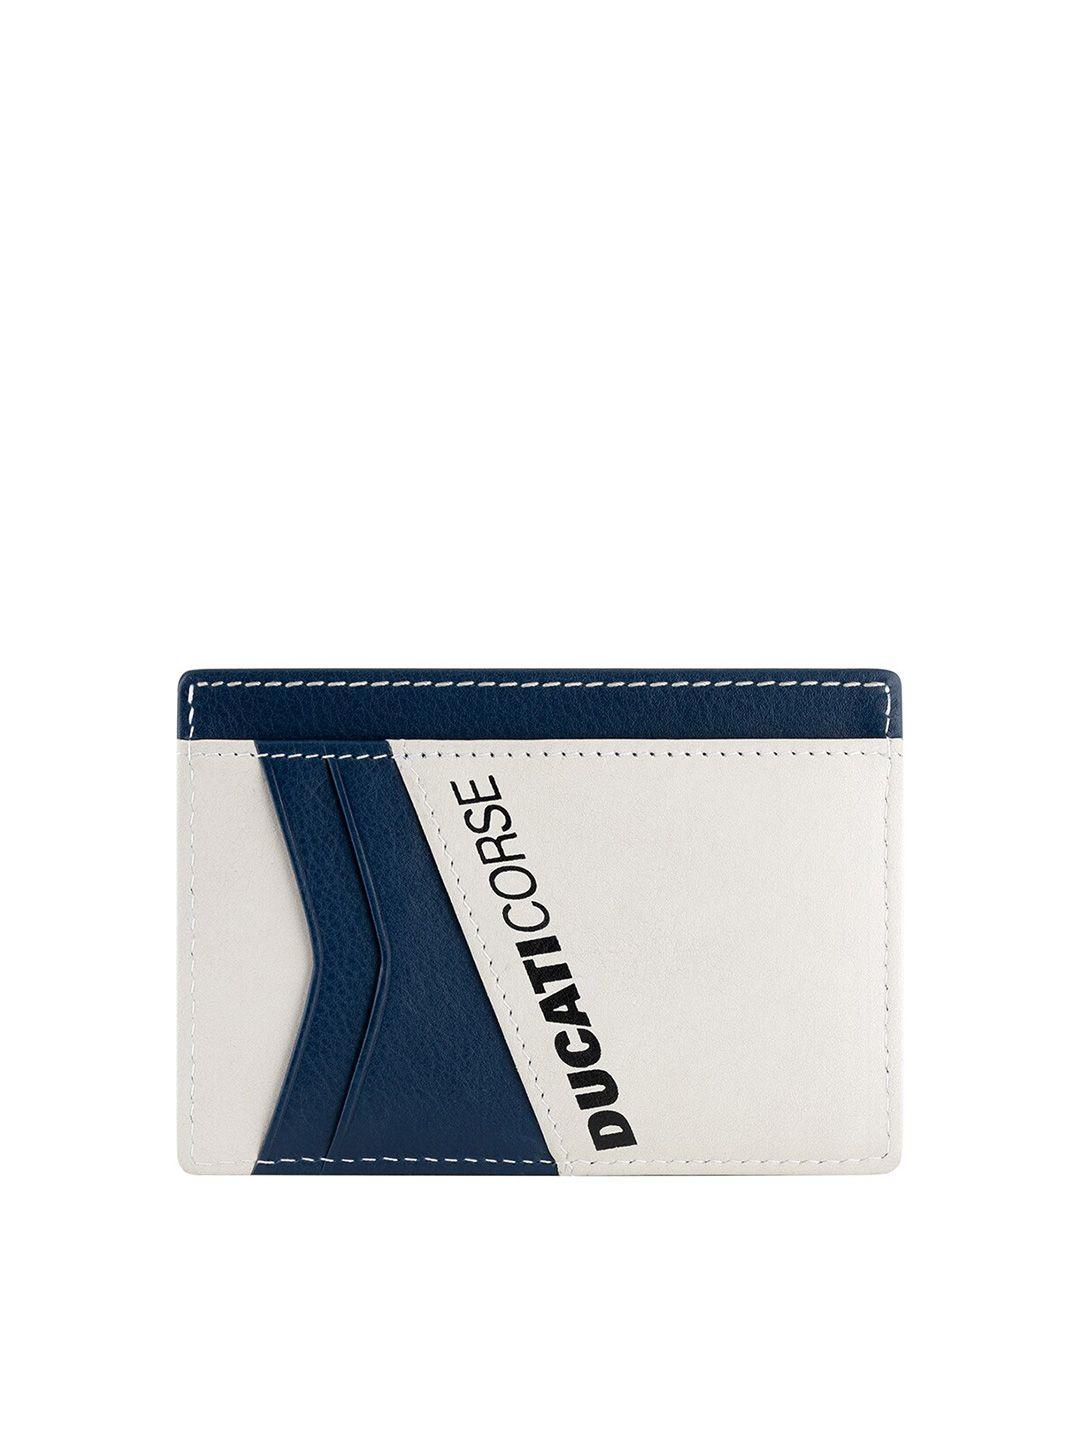 ducati corse men white & blue colourblocked leather card holder